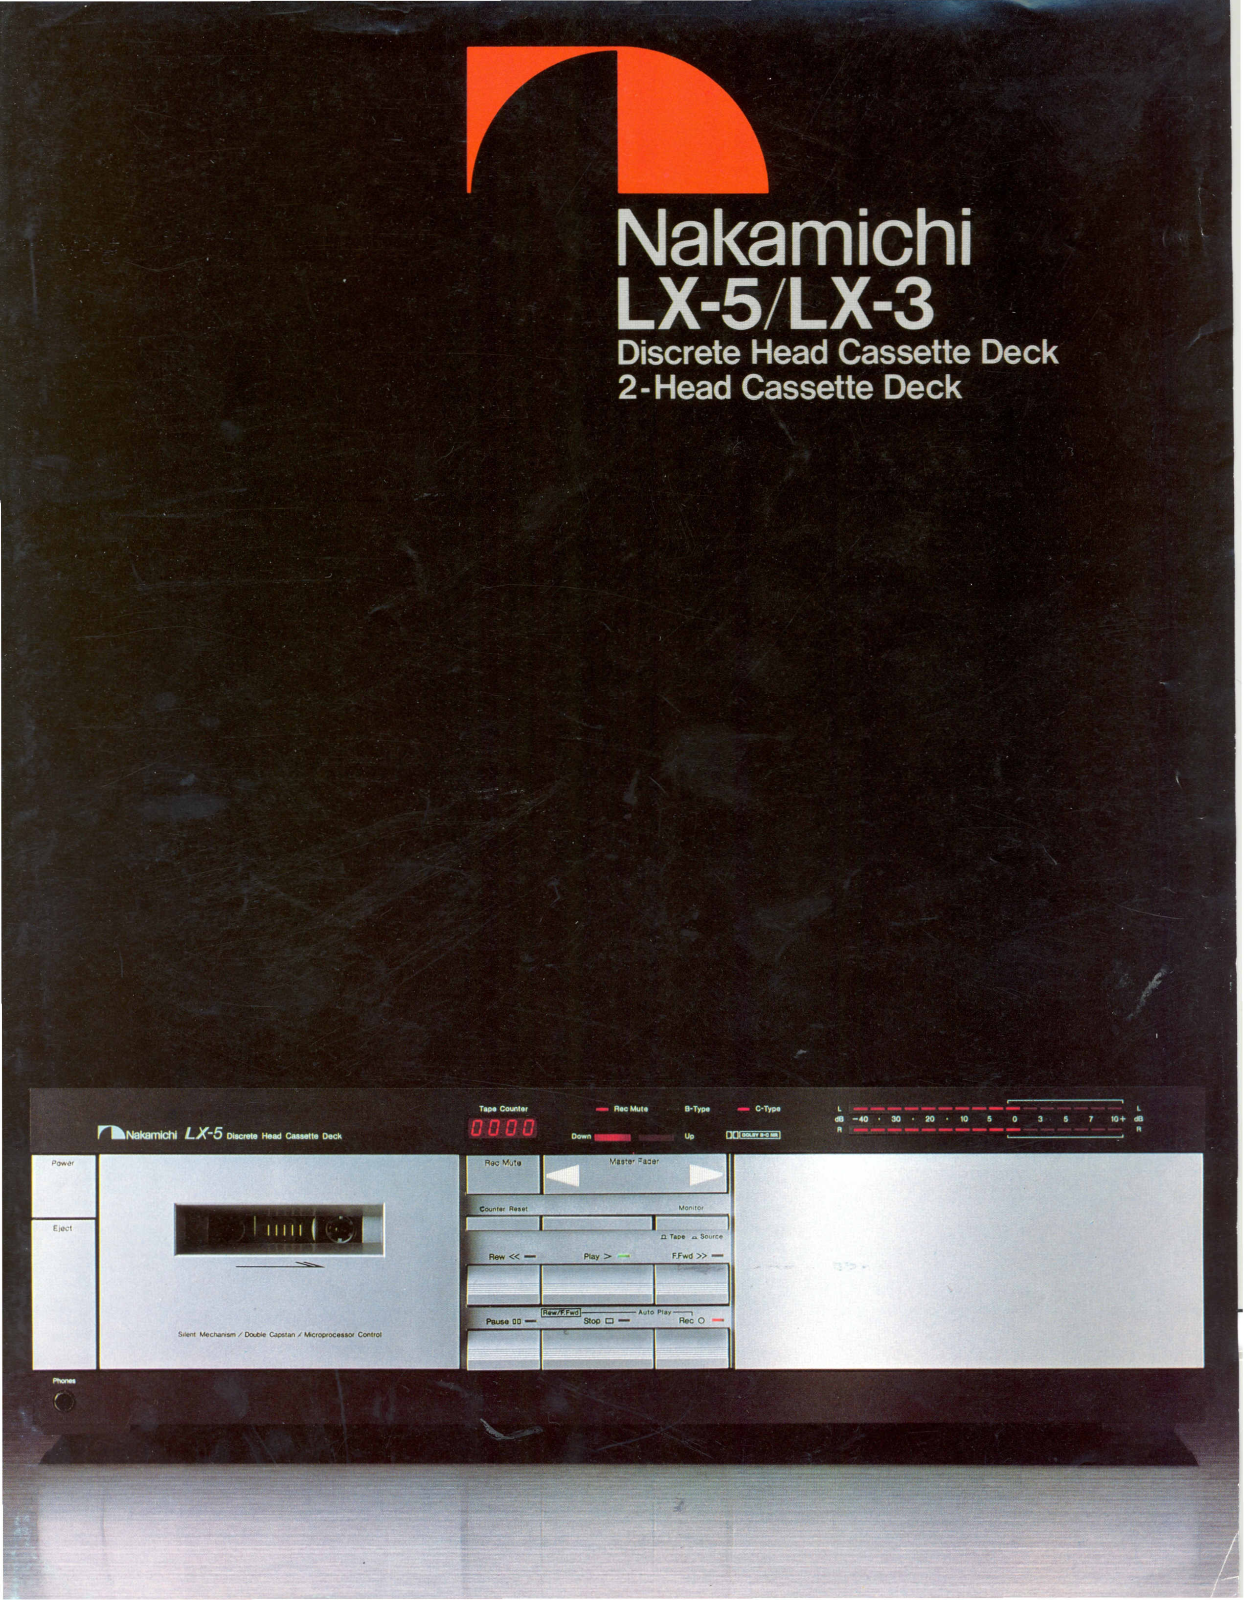 Nakamichi LX-3, LX-5 Brochure